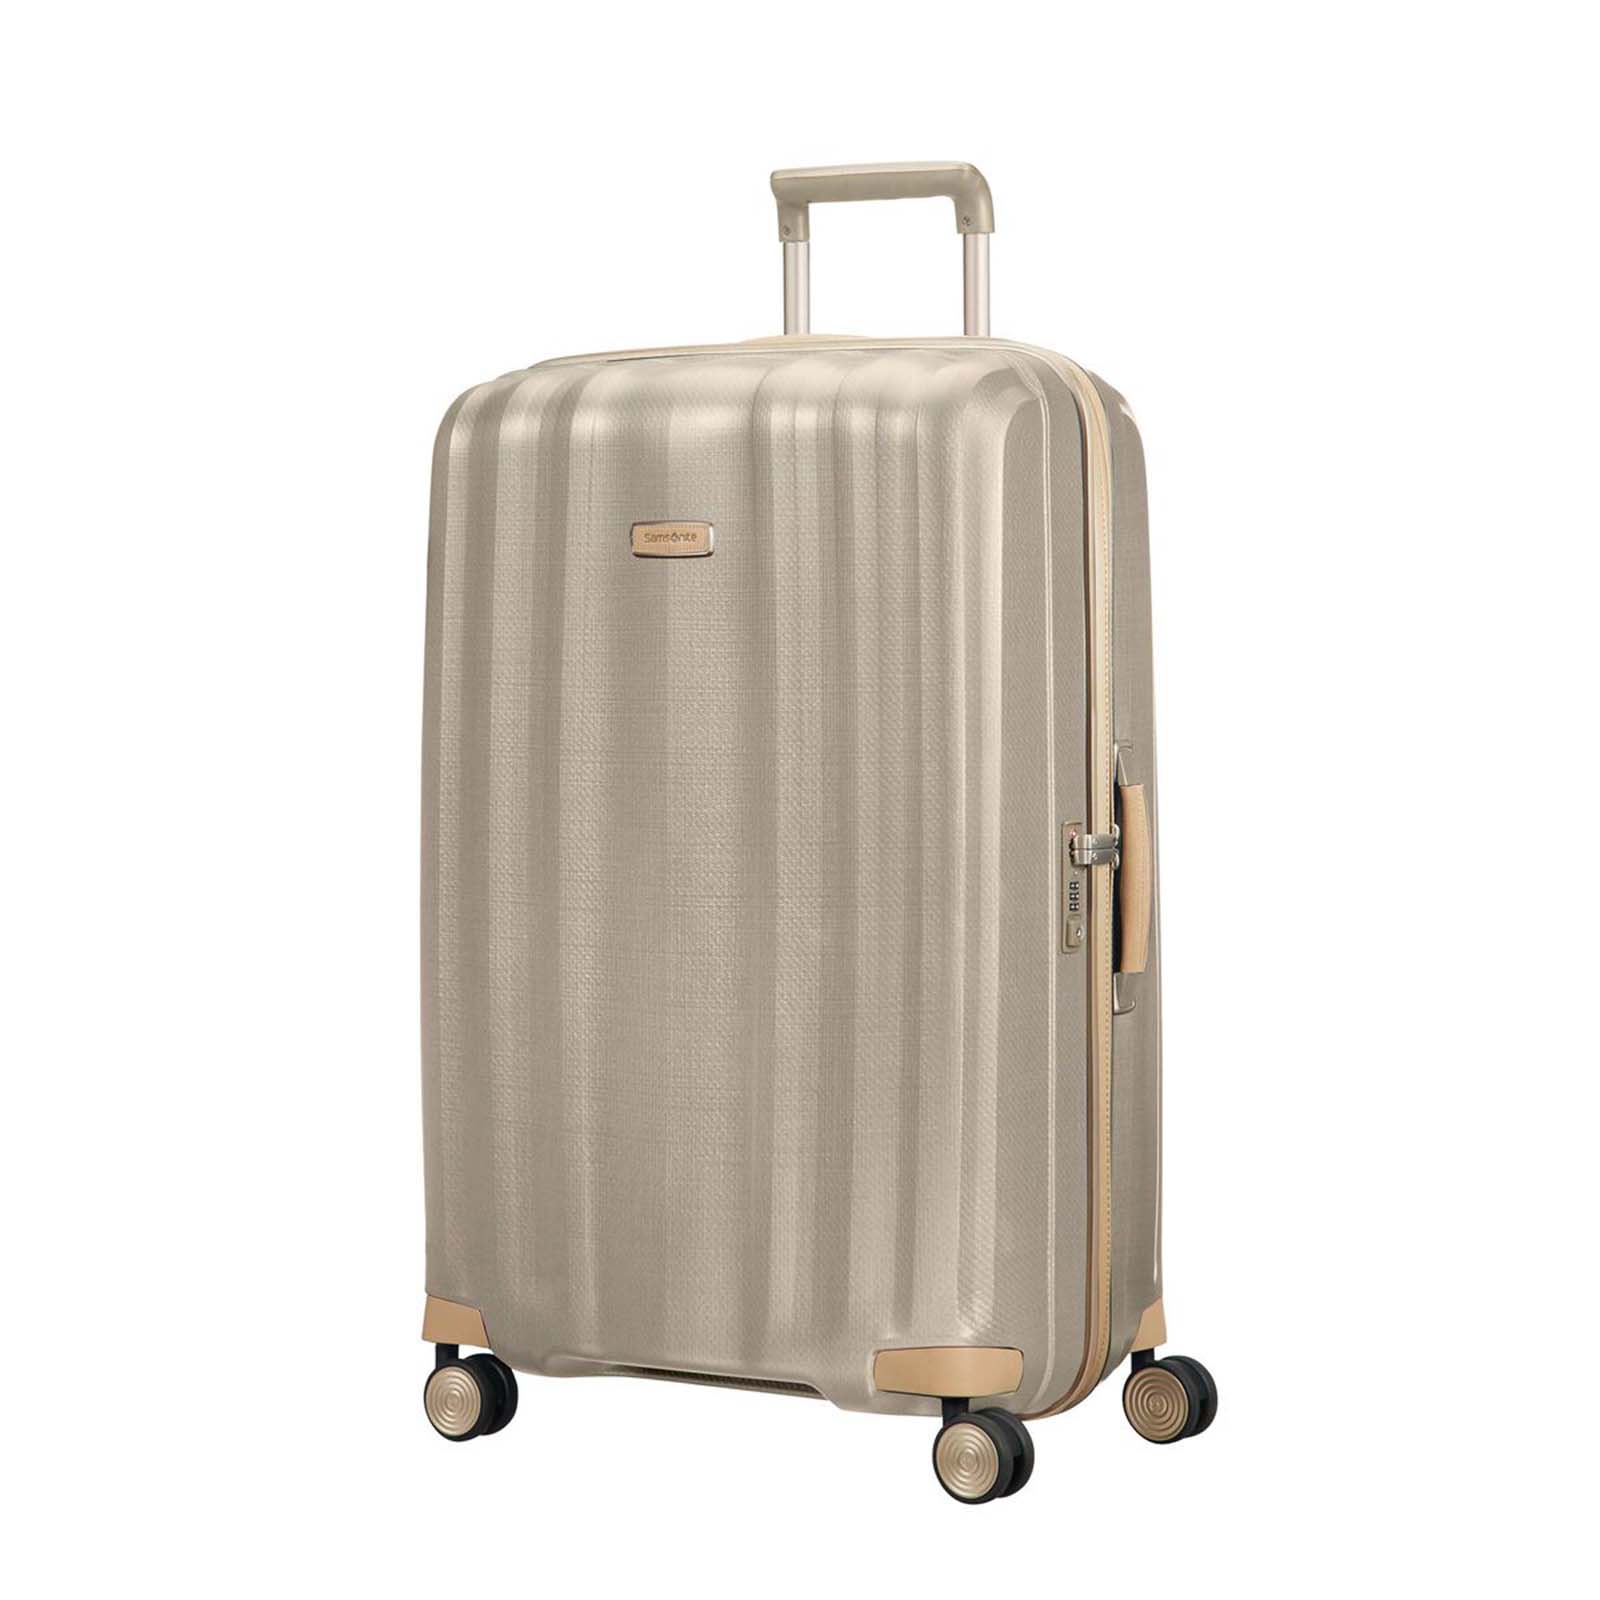 Samsonite-Lite-Cube-Prime-76cm-Suitcase-Ivory-Gold-Front-Angle